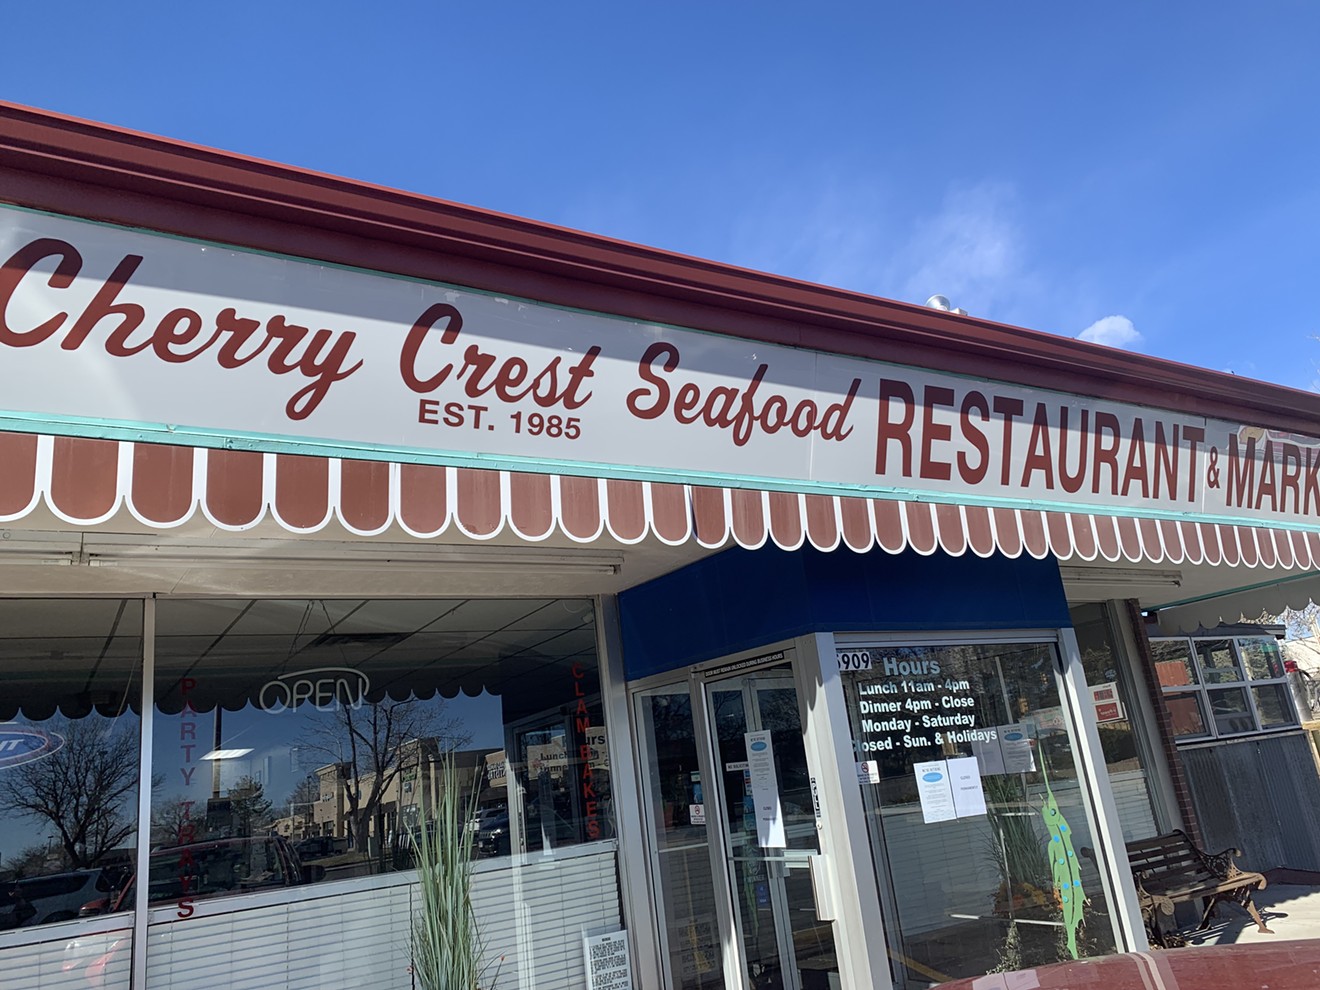 Cherry Crest Seafood Restaurant & Market closed December 3.